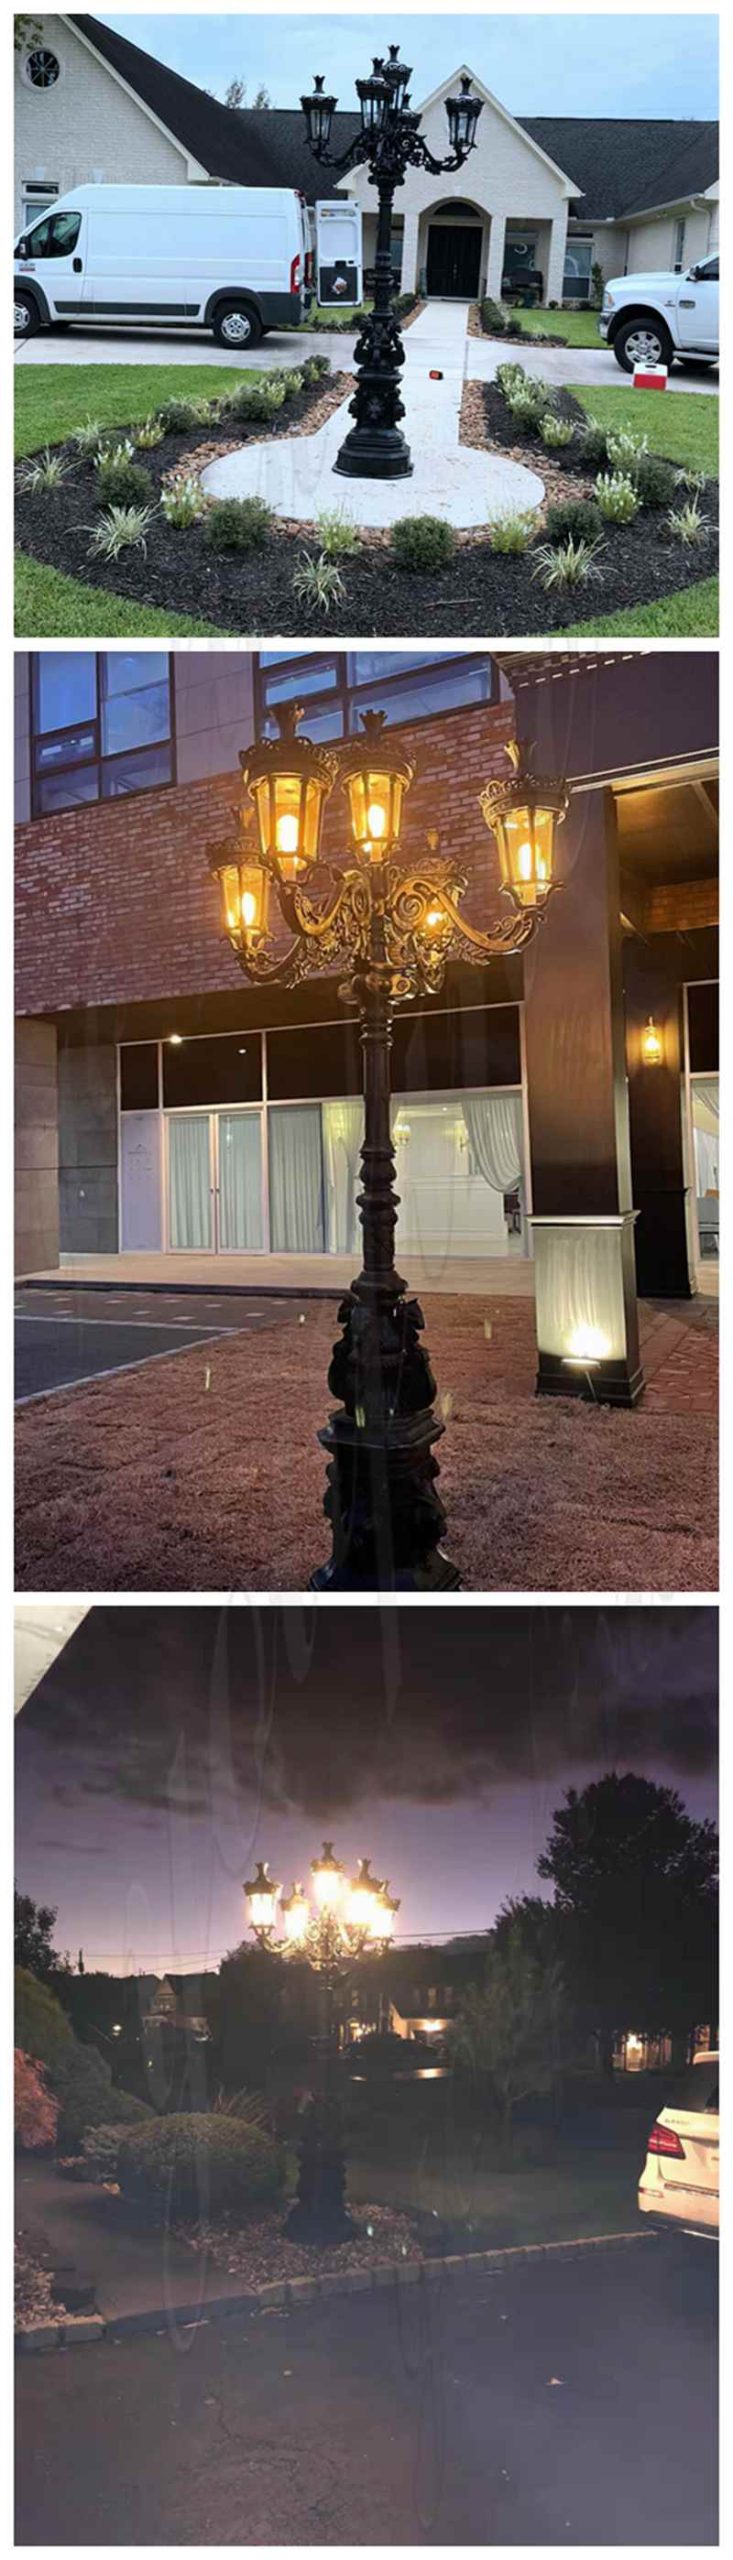 antique street lamps customer feedback